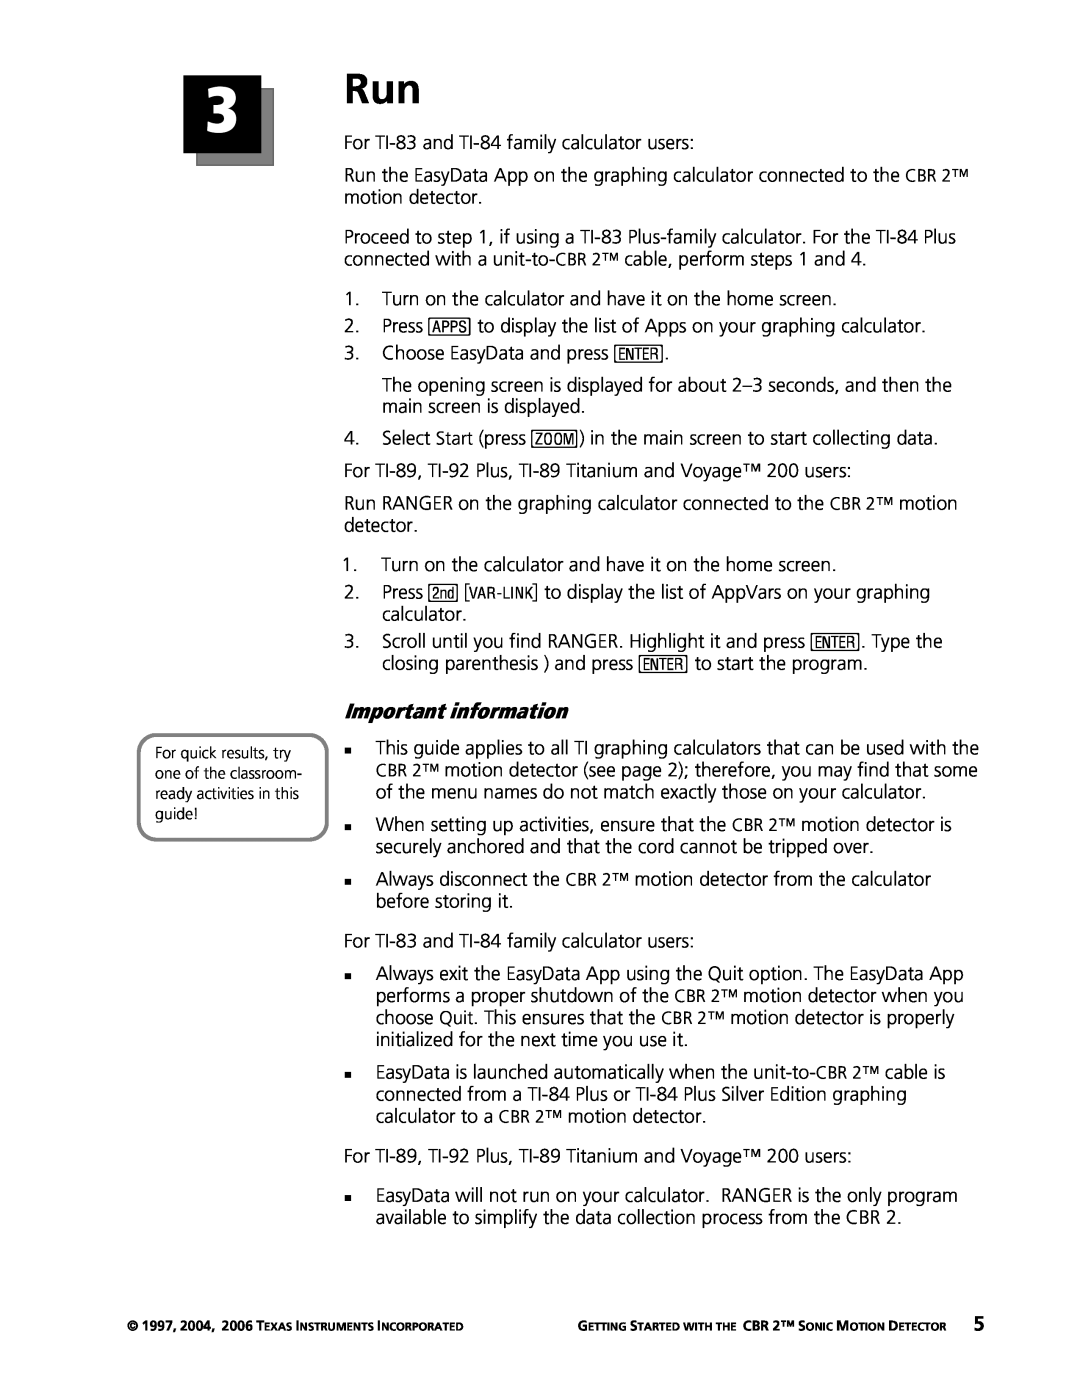 Texas Instruments CBR 2 manual Important information 